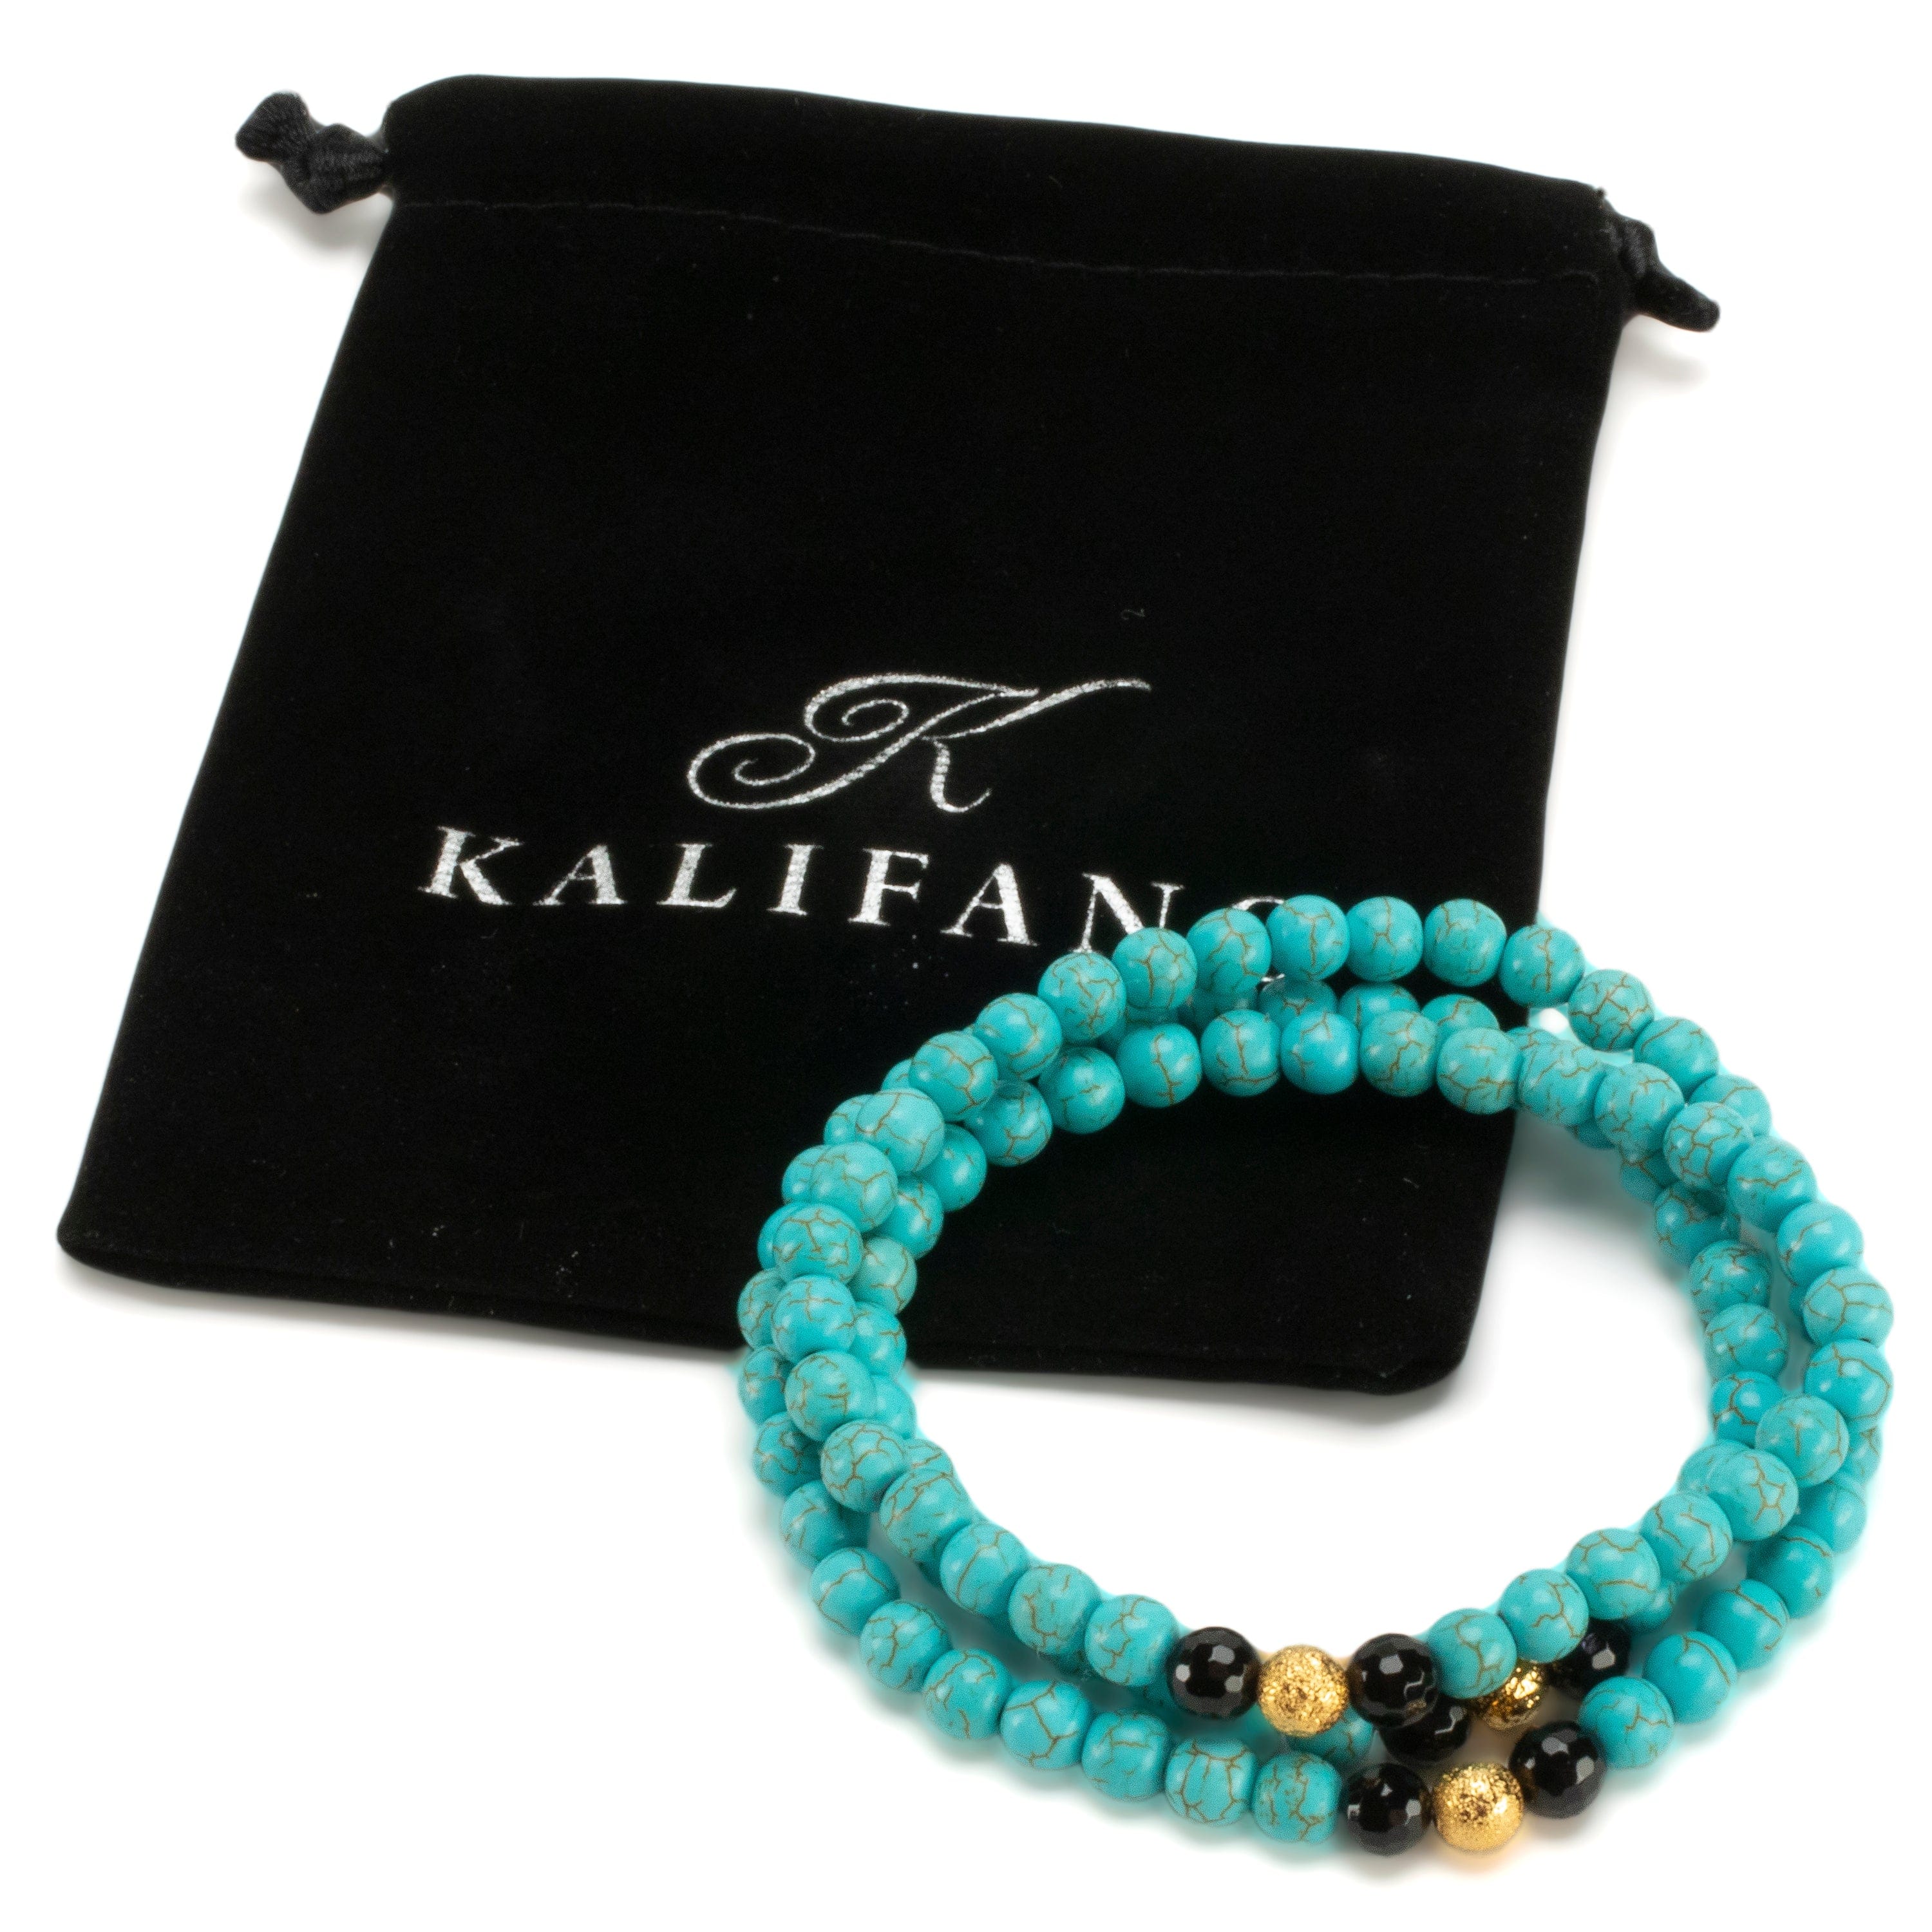 Kalifano Gemstone Bracelets Howlite Turquoise 6mm Beads with Black Agate & Gold Sparkly Accent Beads Triple Wrap Gemstone Elastic Bracelet WHITE-BGI3-084